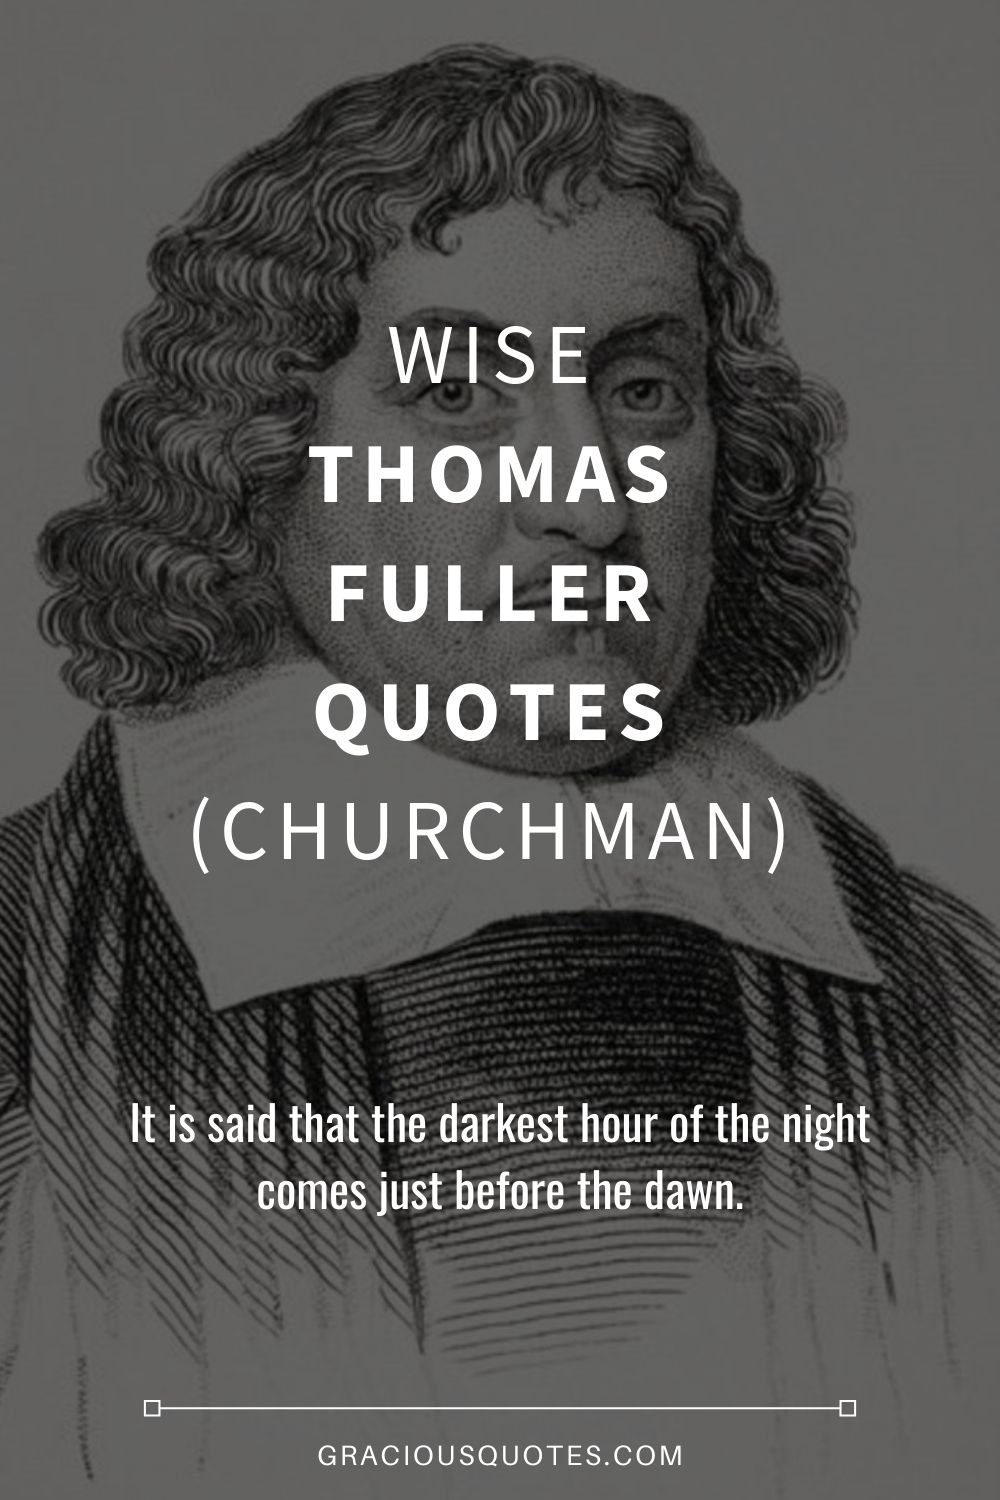 Wise Thomas Fuller Quotes (CHURCHMAN) - Gracious Quotes